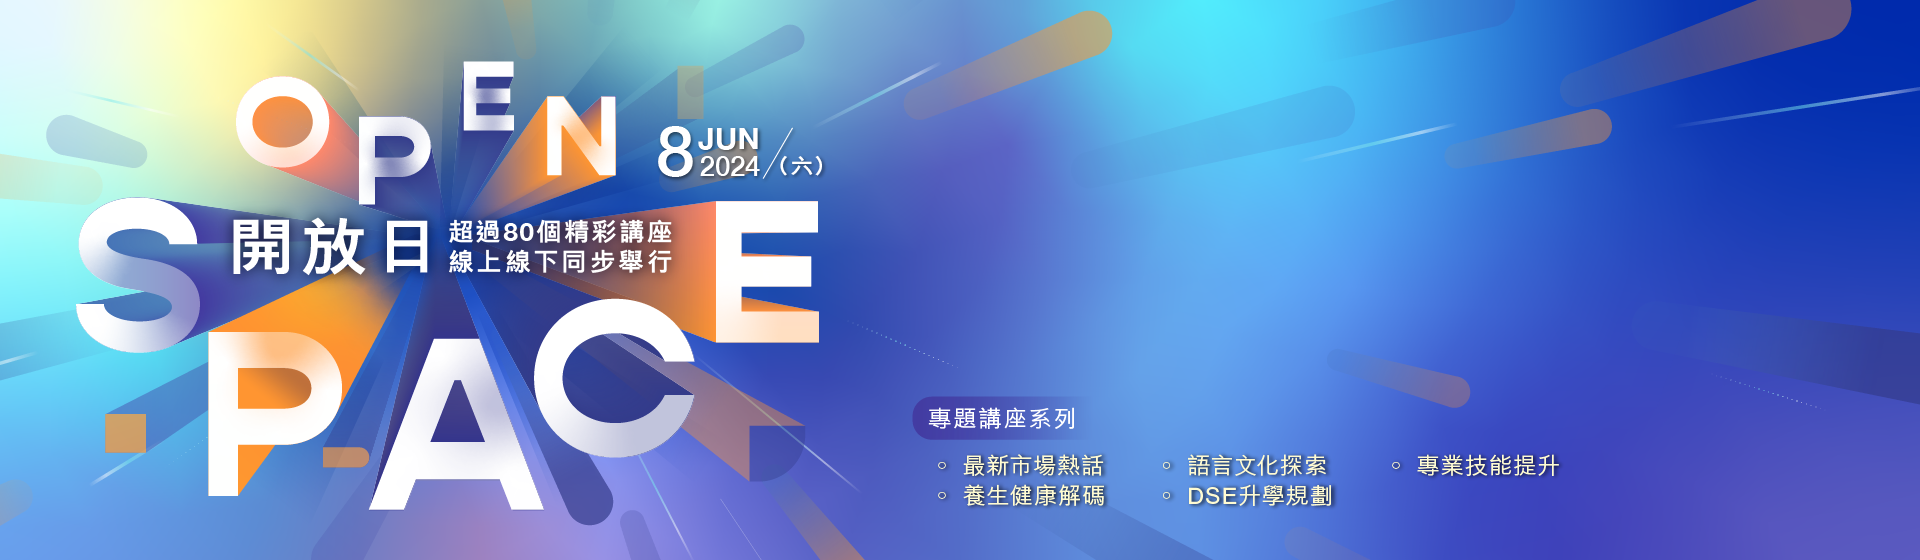 HKU SPACE OPEN SPACE 開放日 六月八日 星期六 超過80個精彩講座線上線下同步舉行